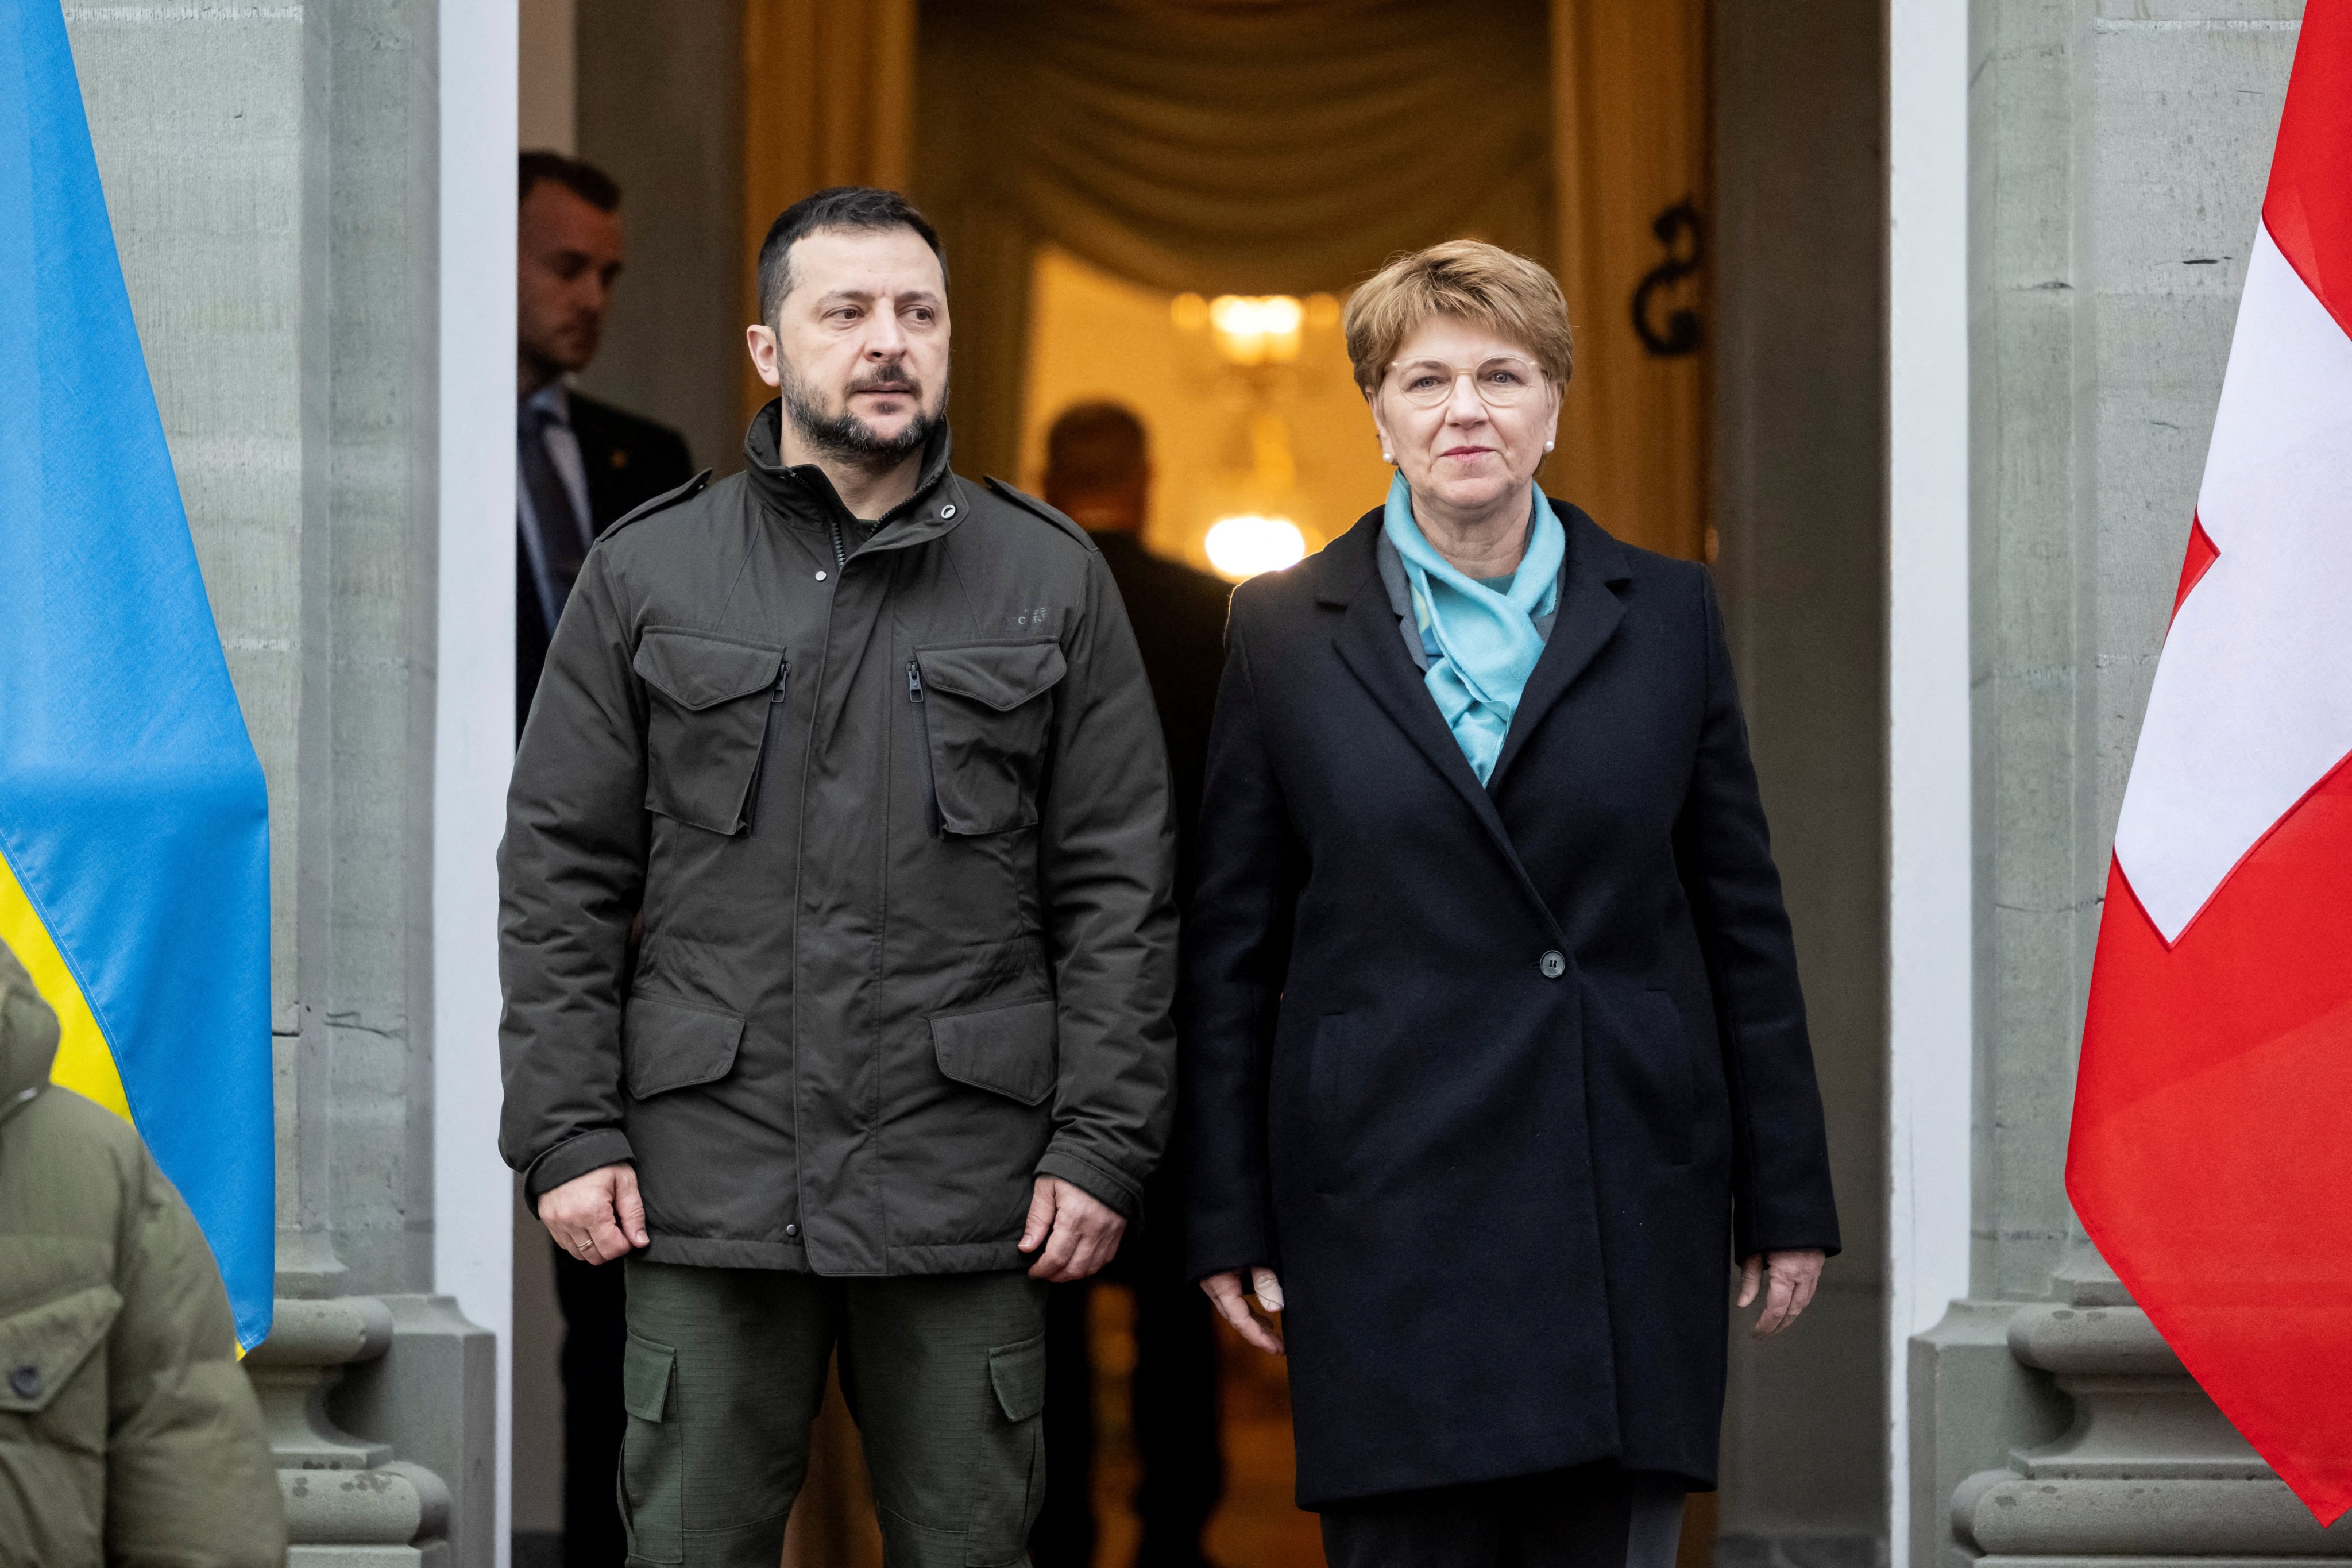 Ukrainian President Volodymyr Zelensky and Swiss President Viola Amherd meeting in January. File photo: Reuters